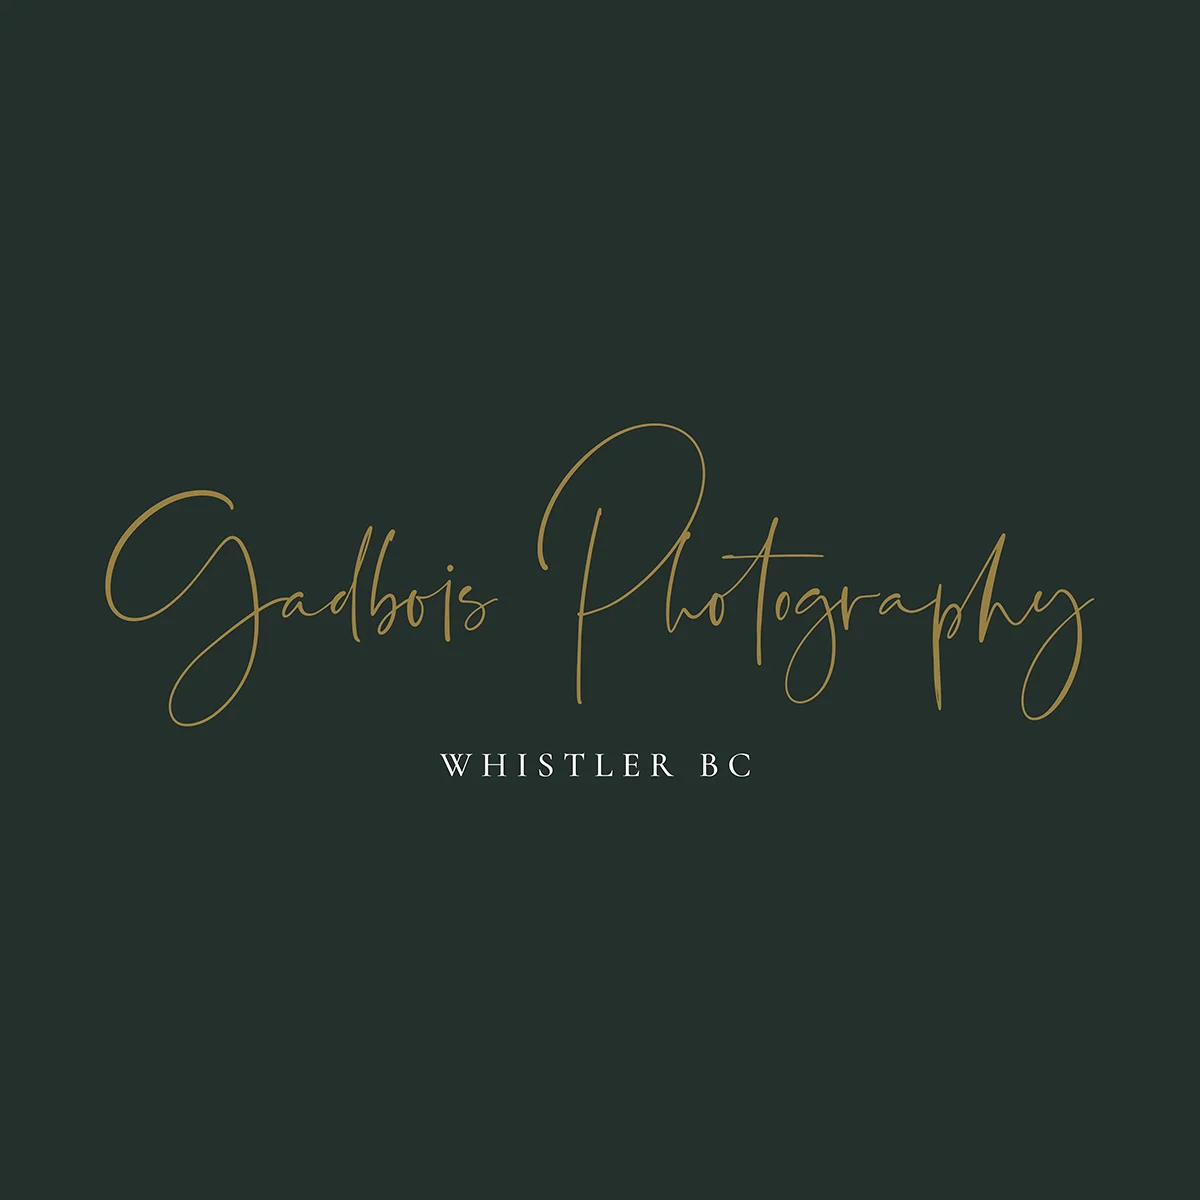 lindsay-mcghee-designs-gadbois-photography-logo-Whistler-BC-dark-1200x1200